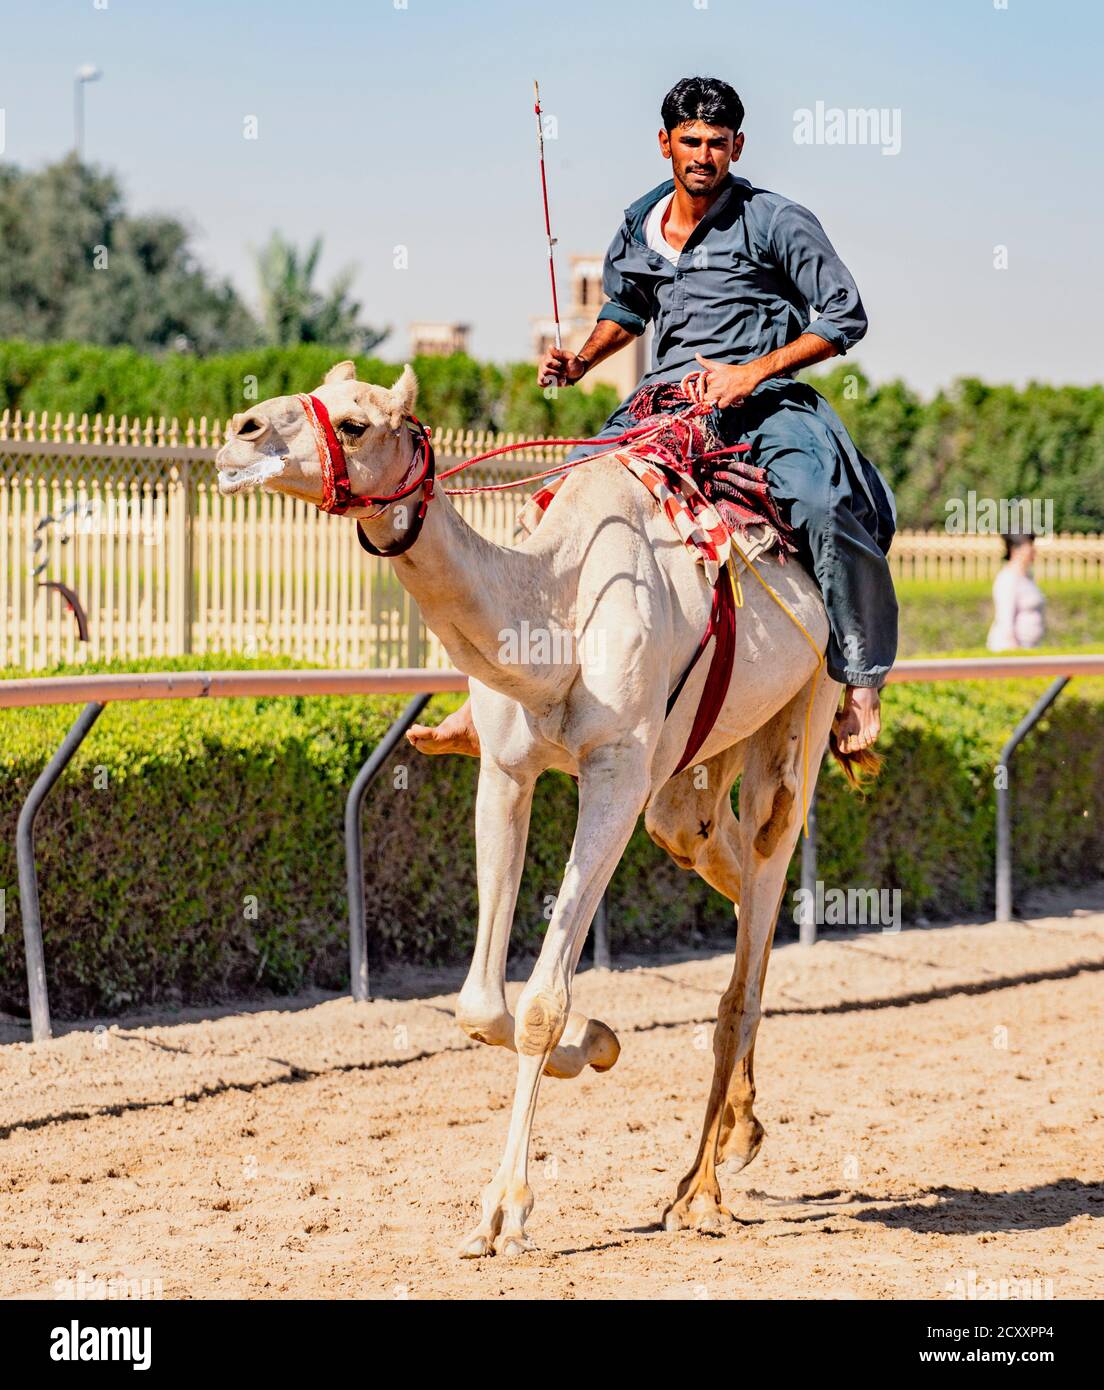 Dubai, VAE, Mar 21, 2018 - Man läuft Kamel während des Trainings für Rennen Stockfoto